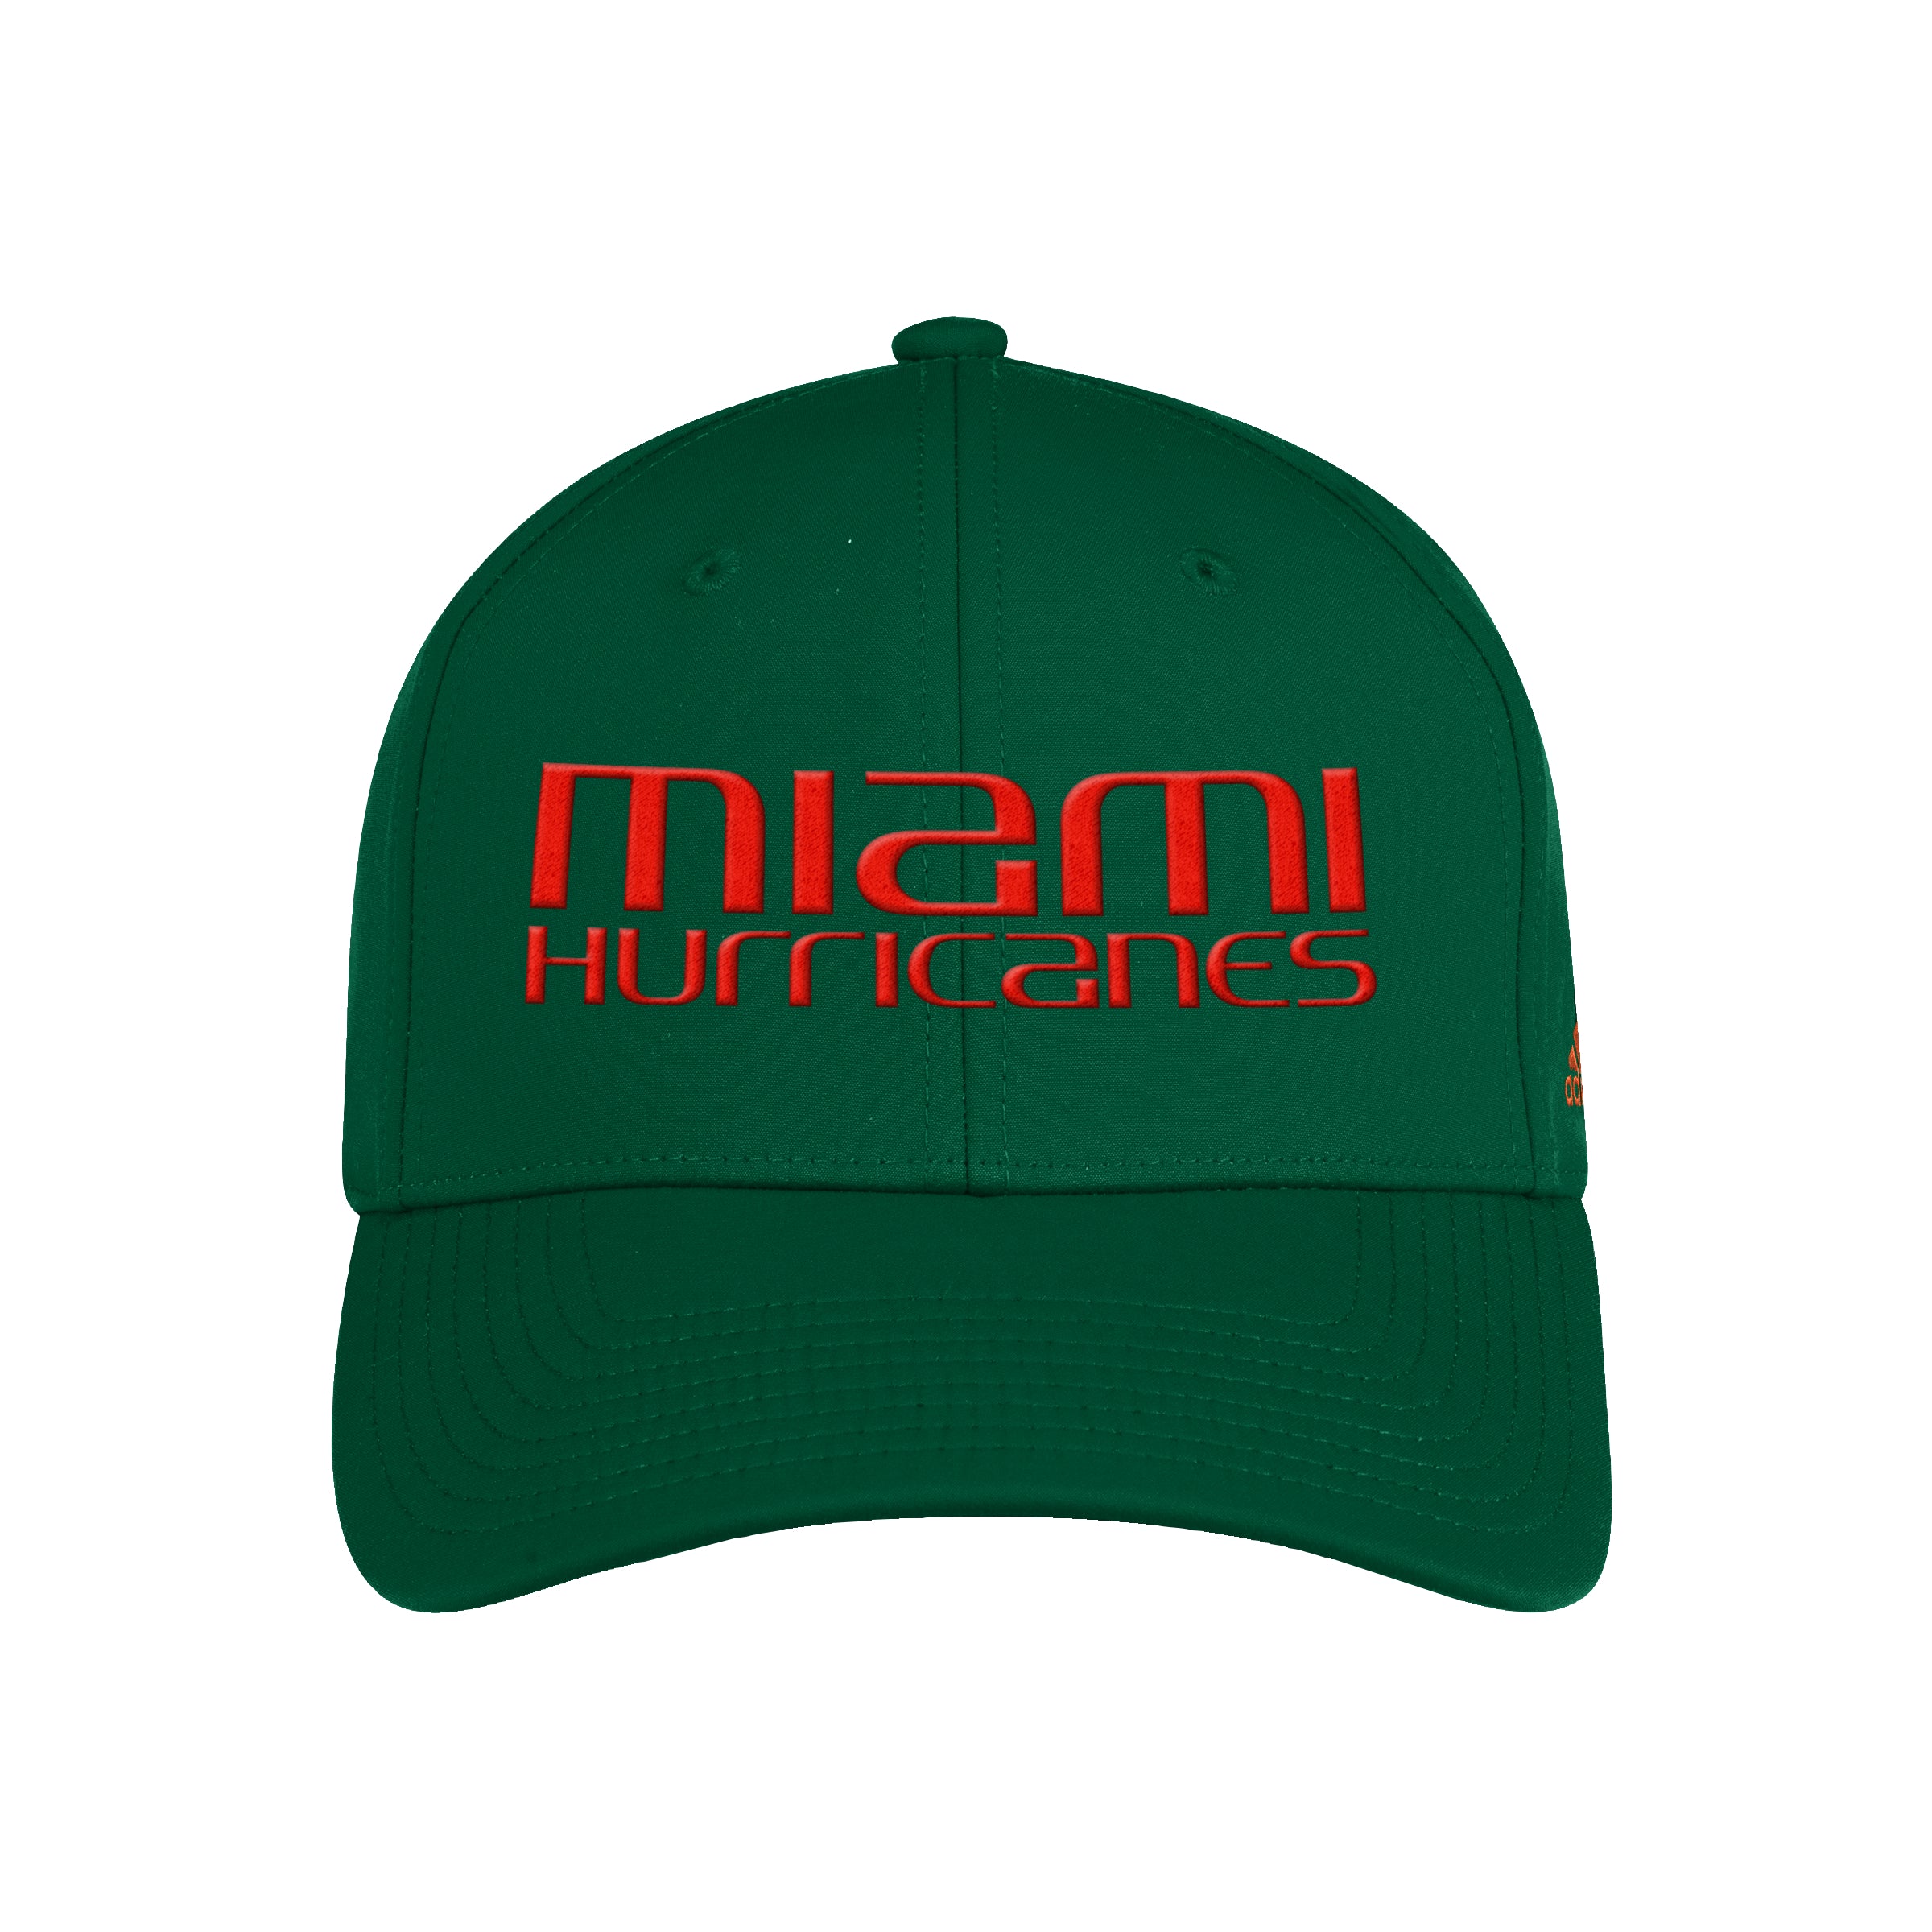 Miami Hurricanes Collapsible Travel Sun Hat - Amelia - Black